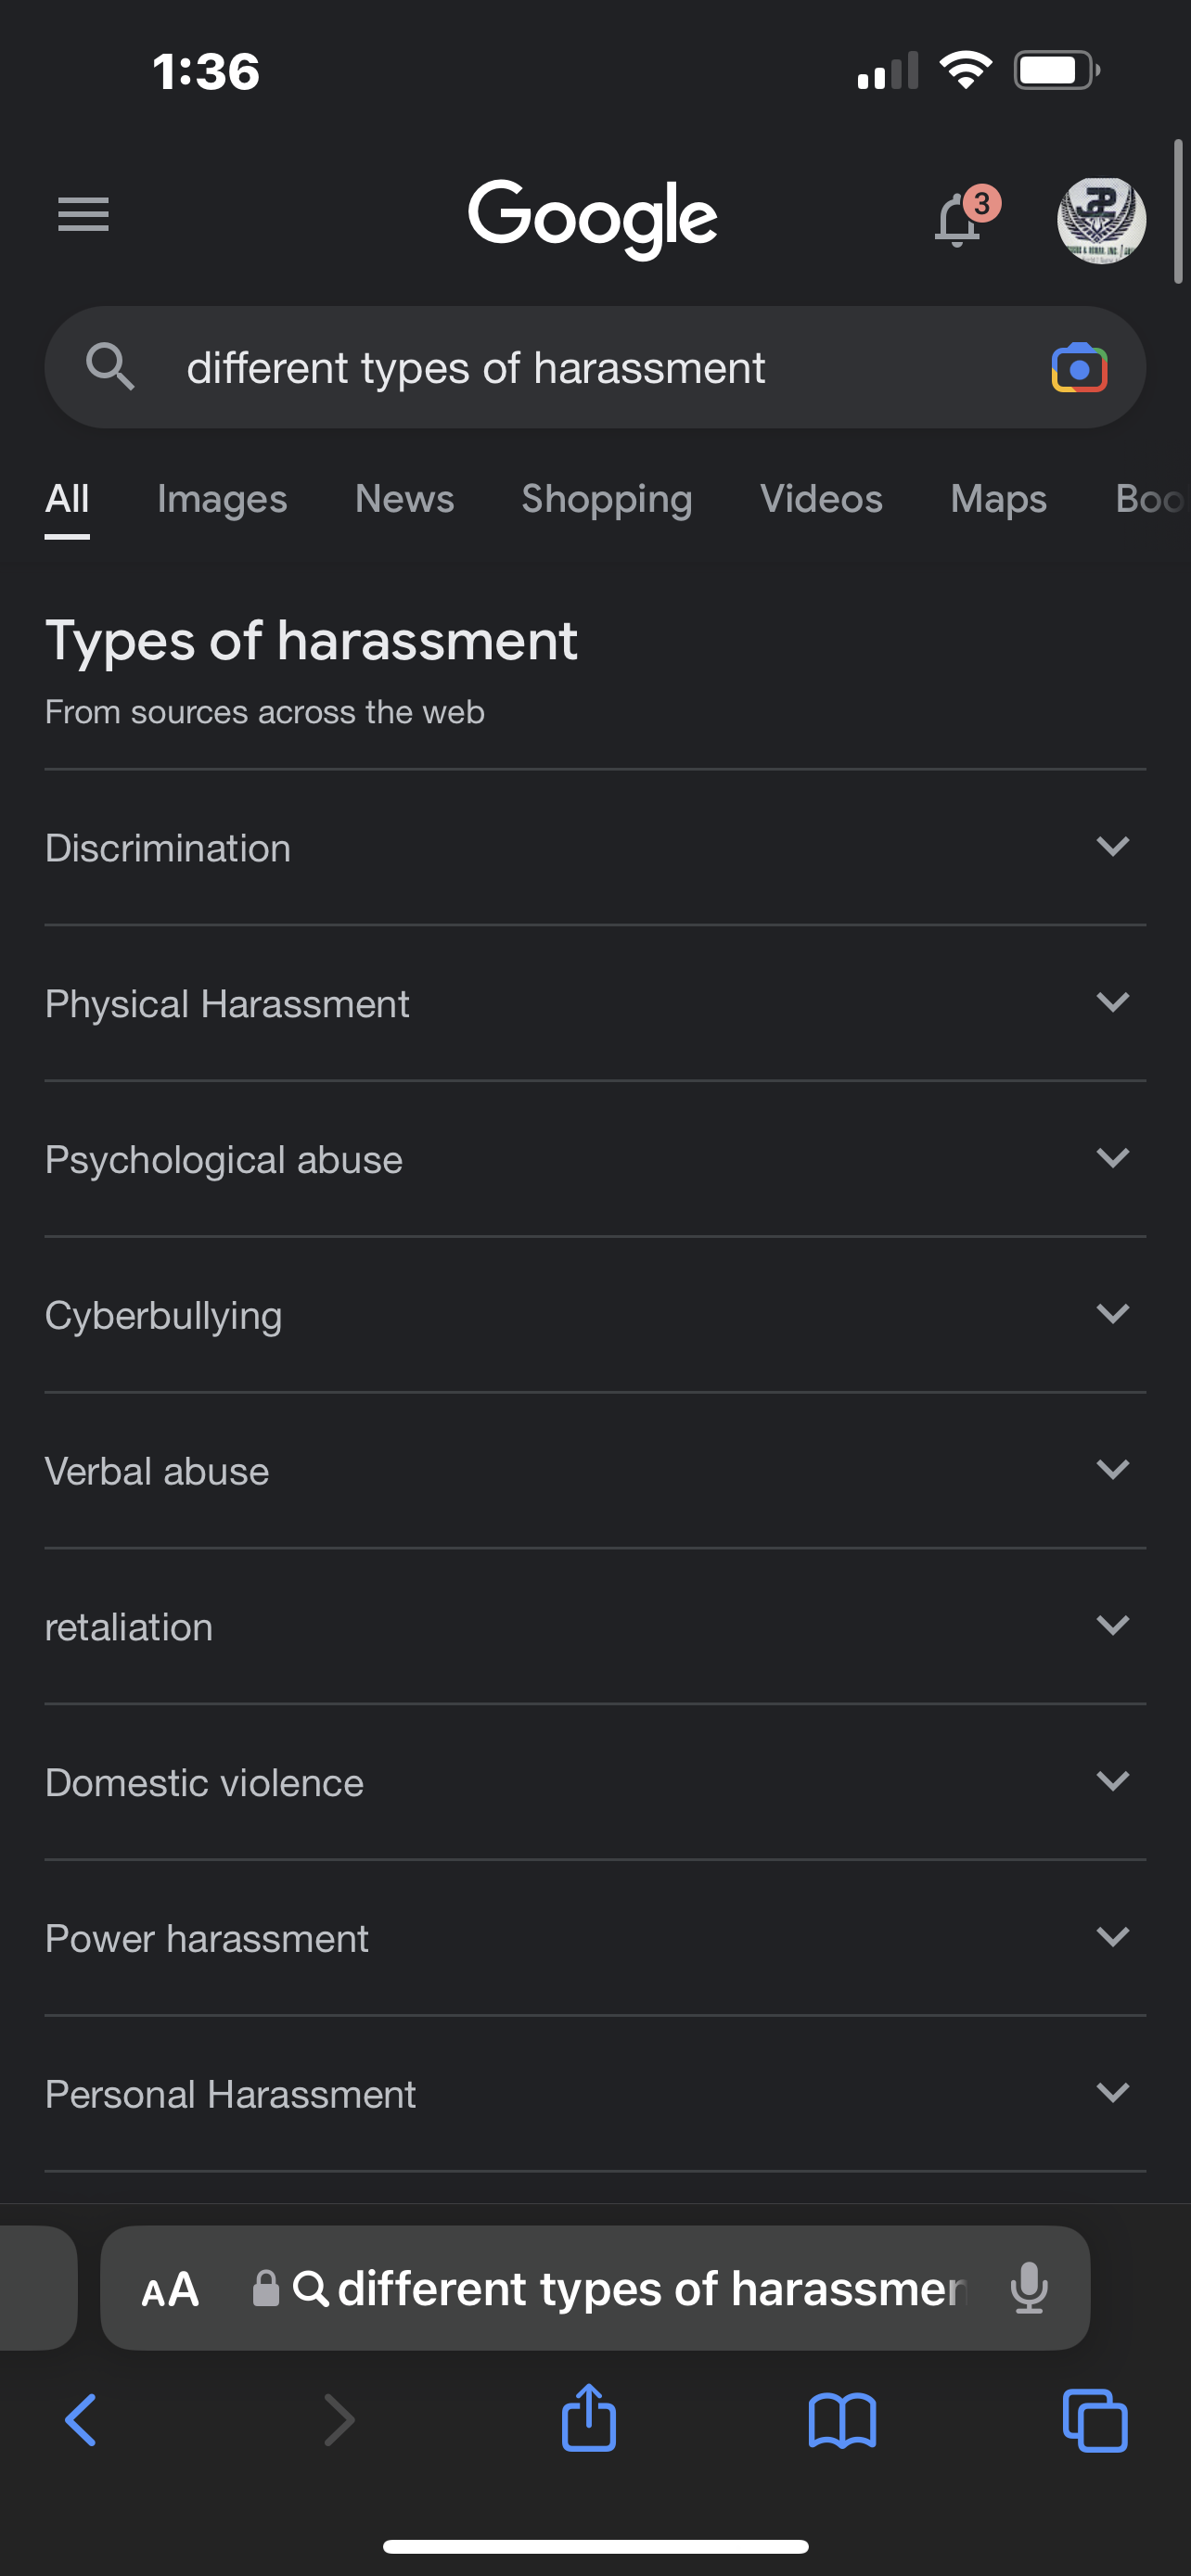 List of Google harassment types